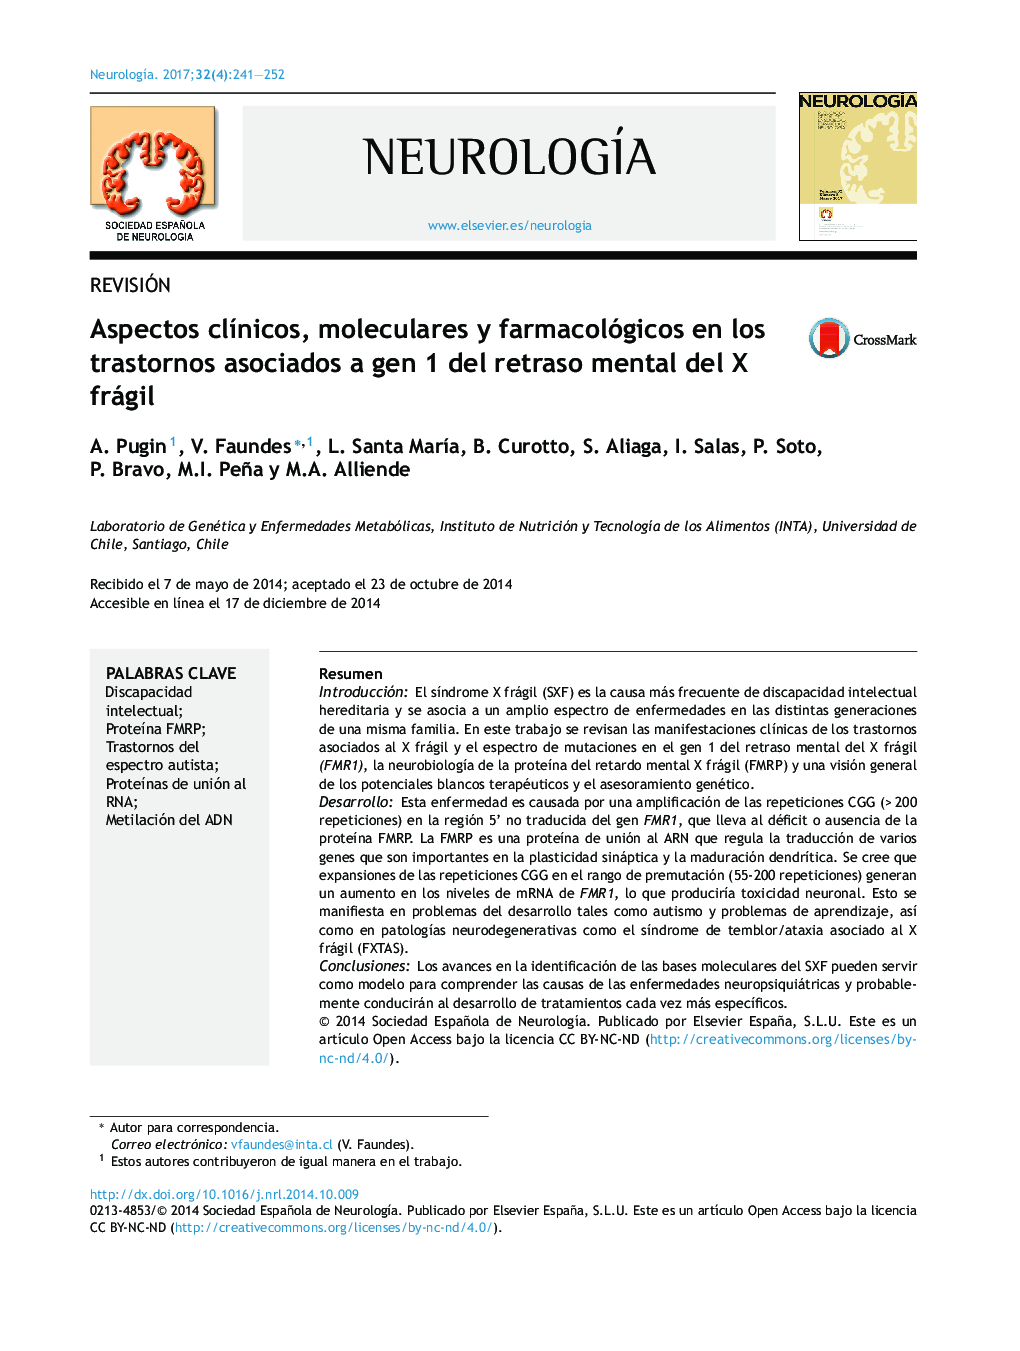 RevisiónAspectos clÃ­nicos, moleculares y farmacológicos en los trastornos asociados a gen 1 del retraso mental del X frágilClinical, molecular, and pharmacological aspects of FMR1 related disorders